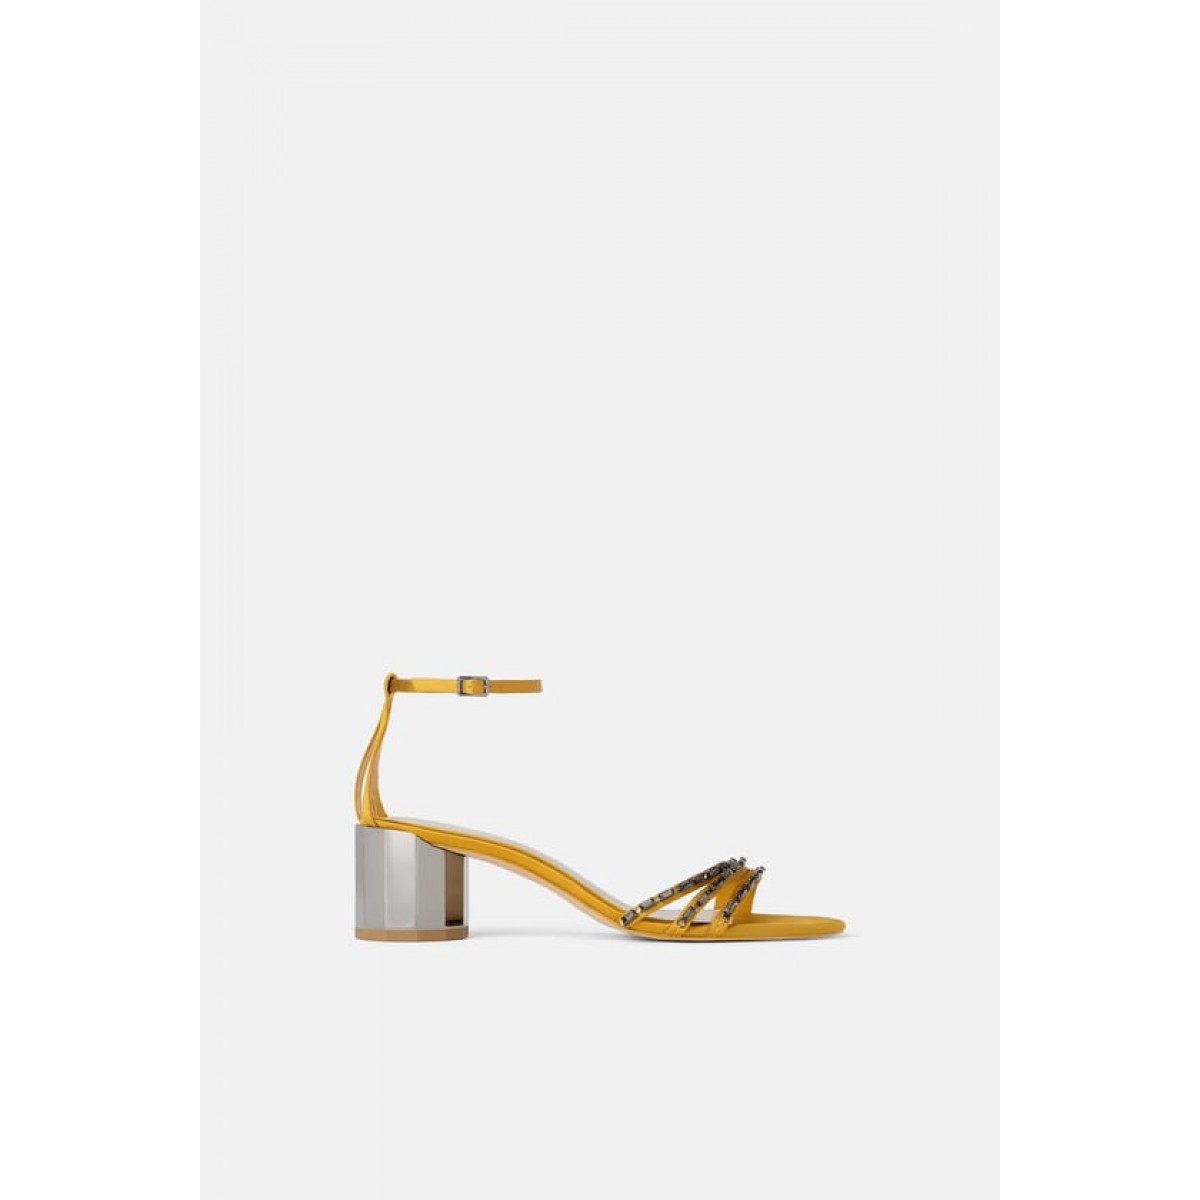 Zara Geometric Mid Heel Shoes With Rhinestones